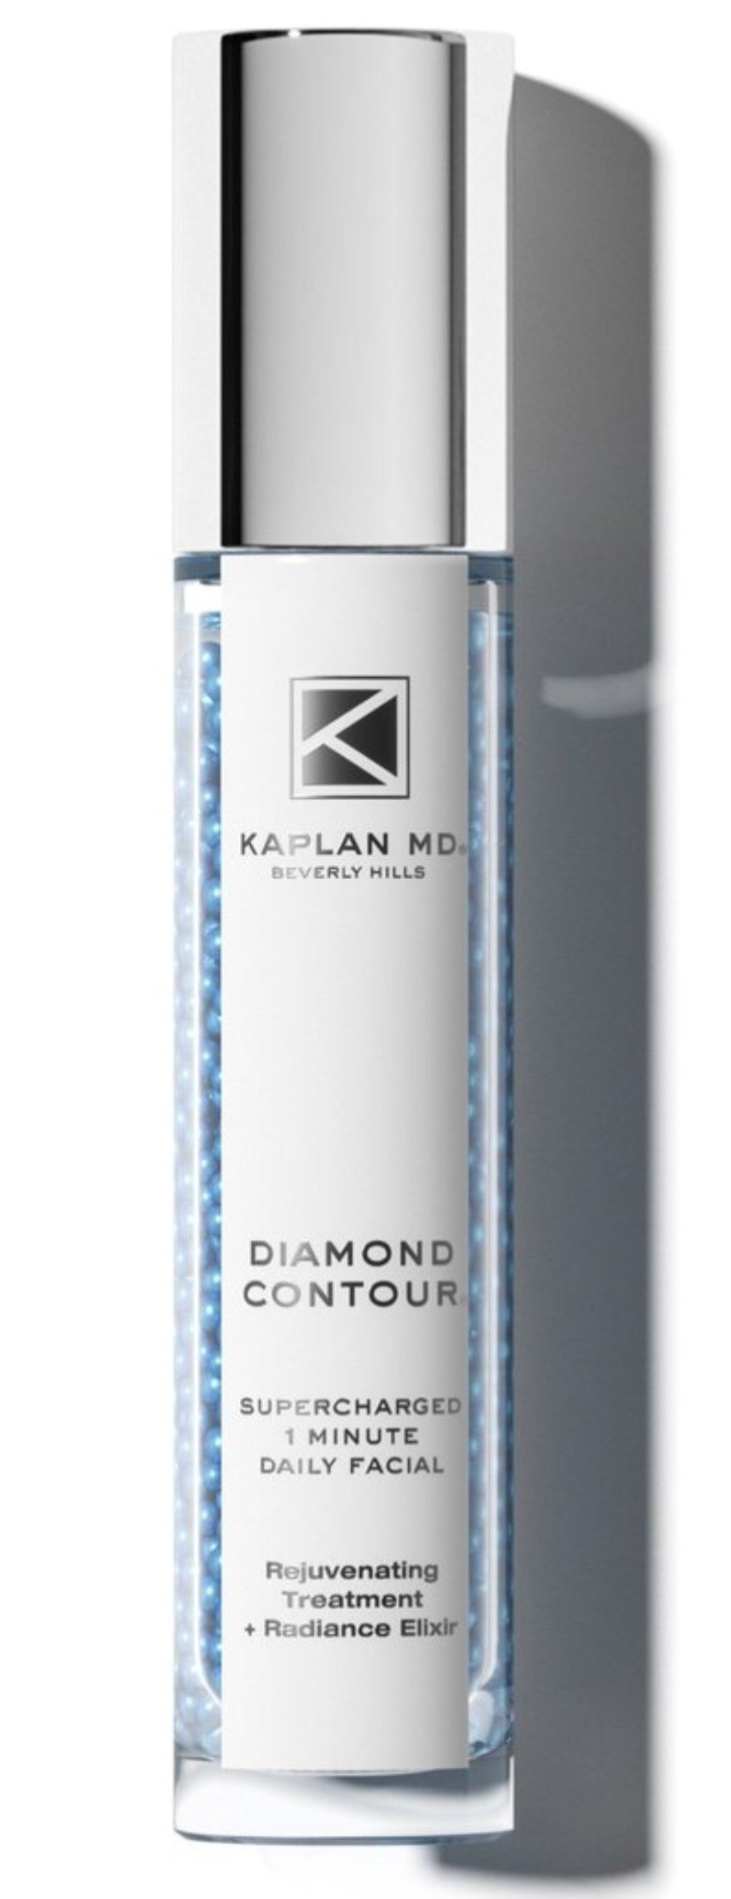 KaplanMD Diamond Contour Supercharged 1 Minute Daily Facial